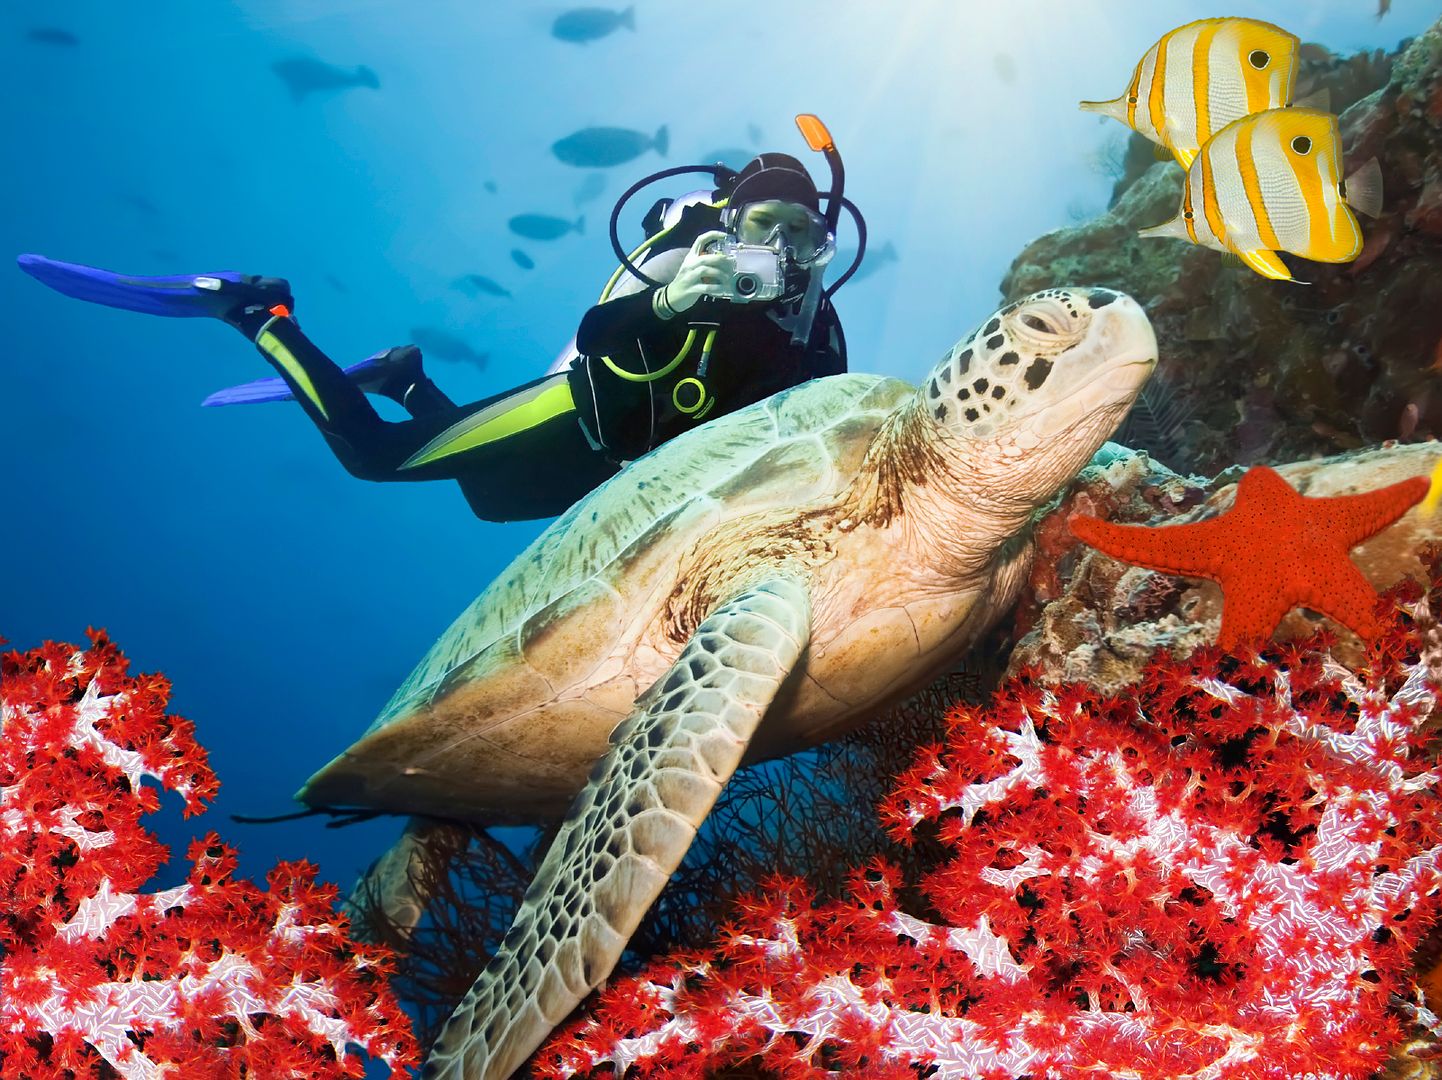 Save the Reef Riviera Maya